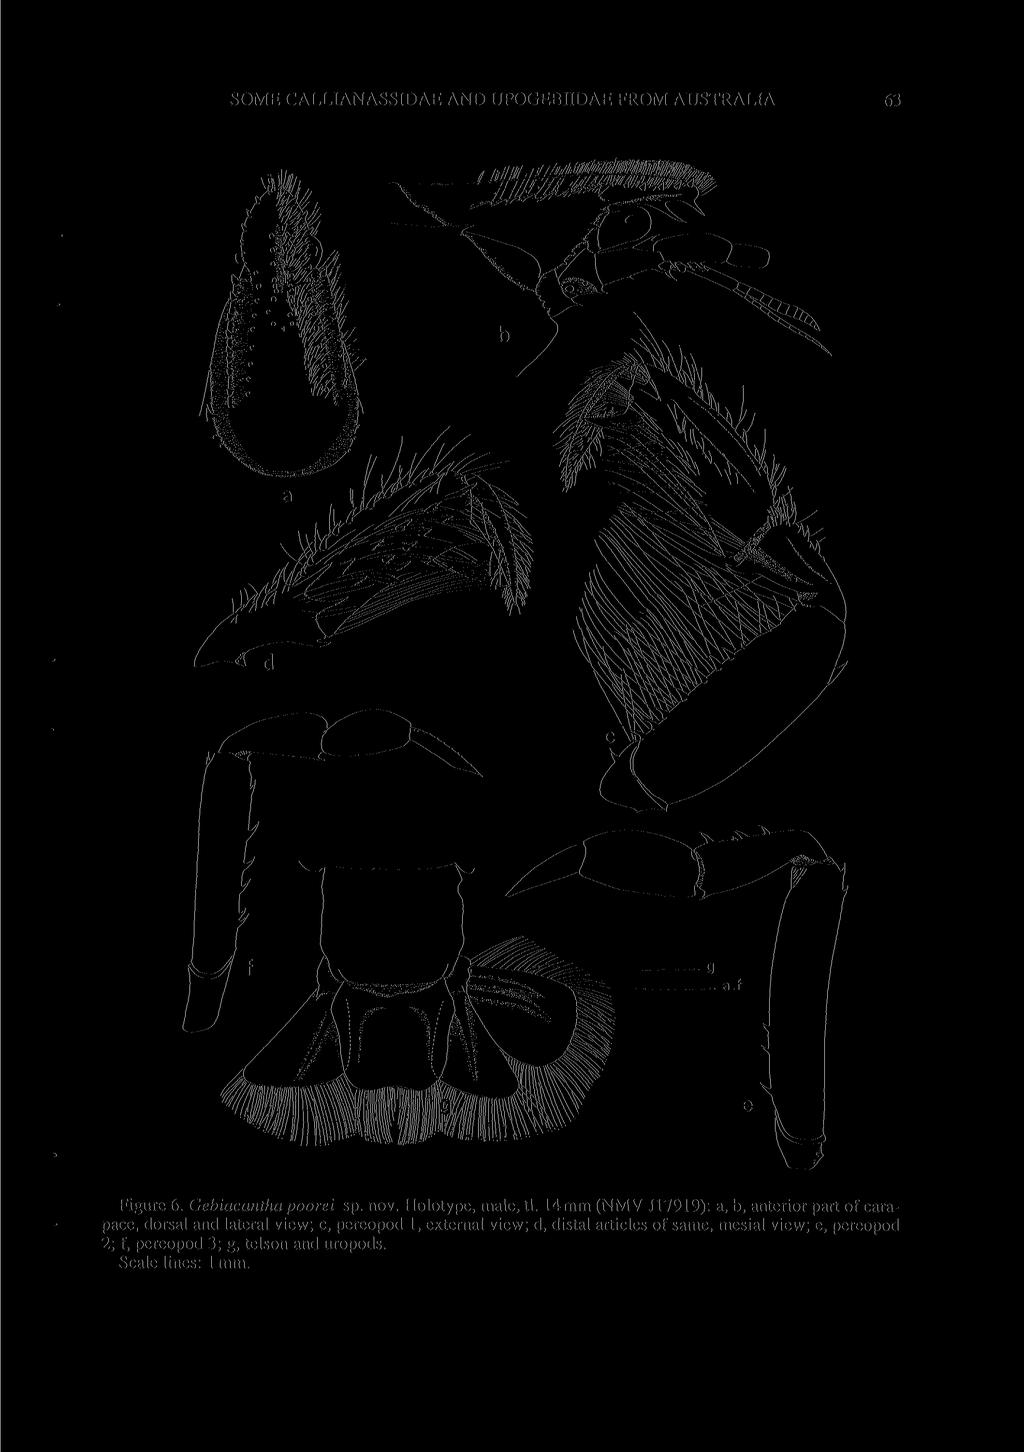 SOME CALLIANASSIDAE AND UPOGEBIIDAE FROM AUSTRALIA 63 m IY MA, Figure 6. Gebiacantha poorei sp. nov. Holotype, male, tl.